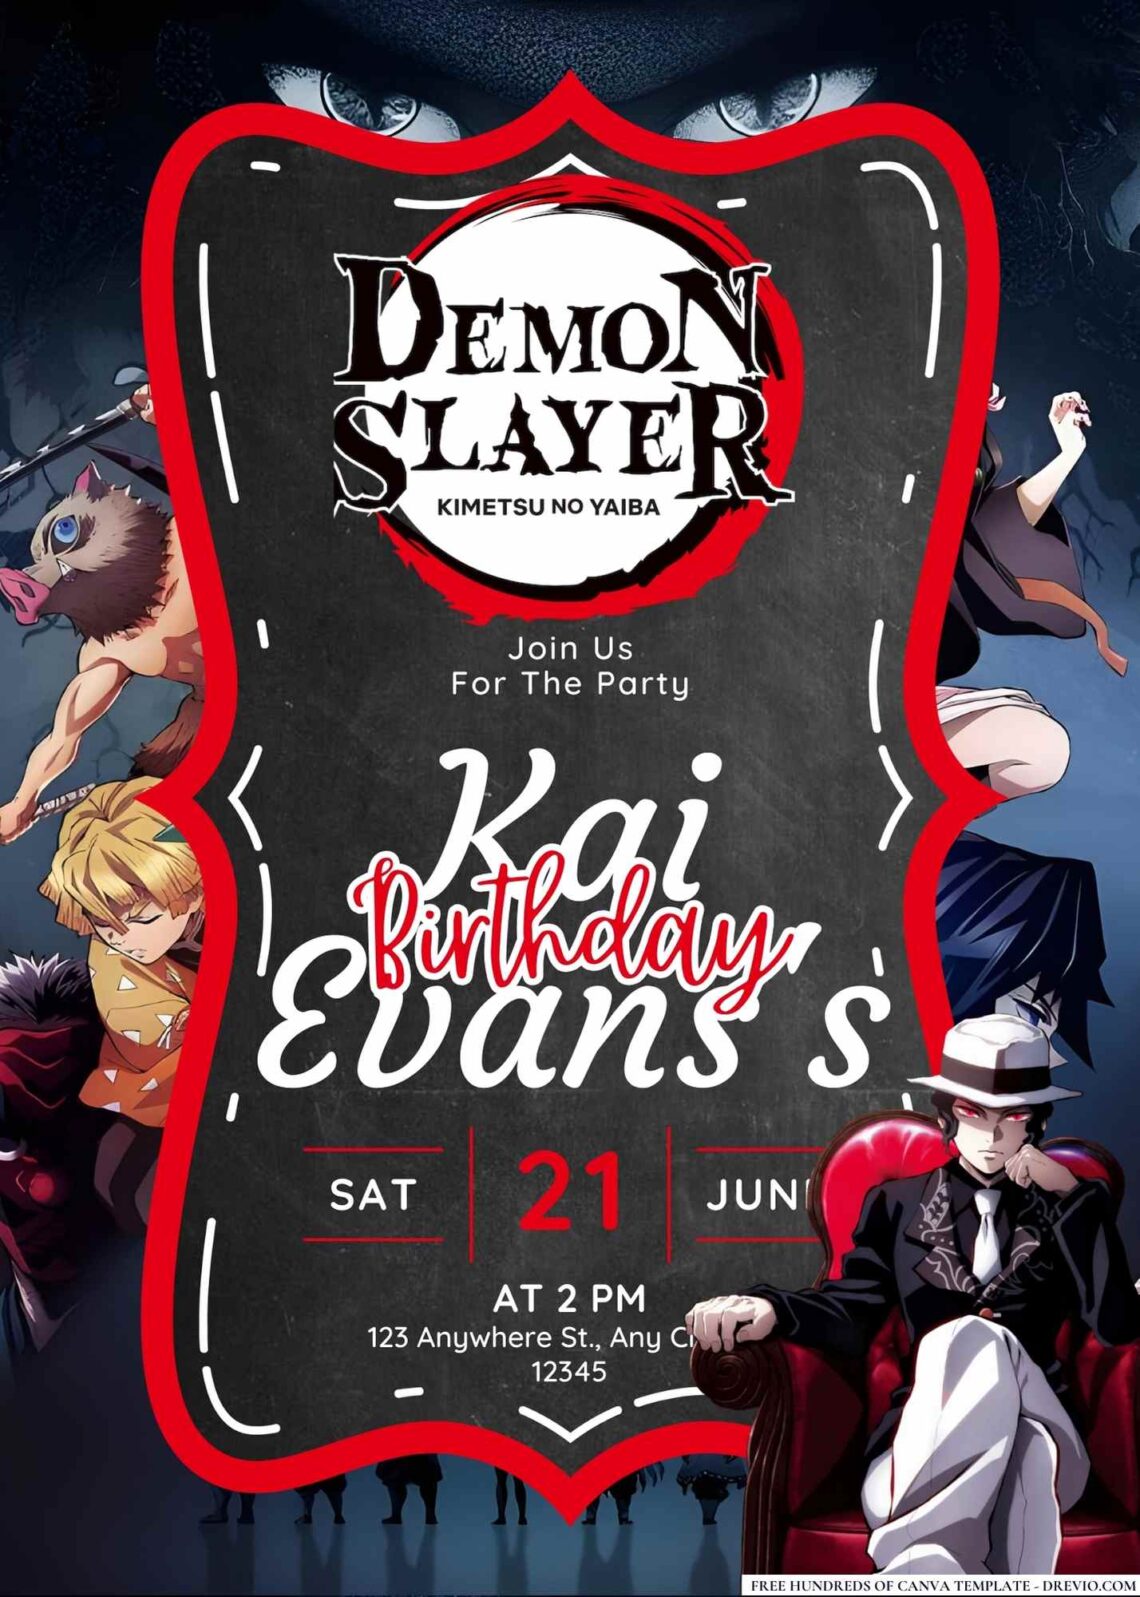 FREE Demon Slayer Birthday Invitations